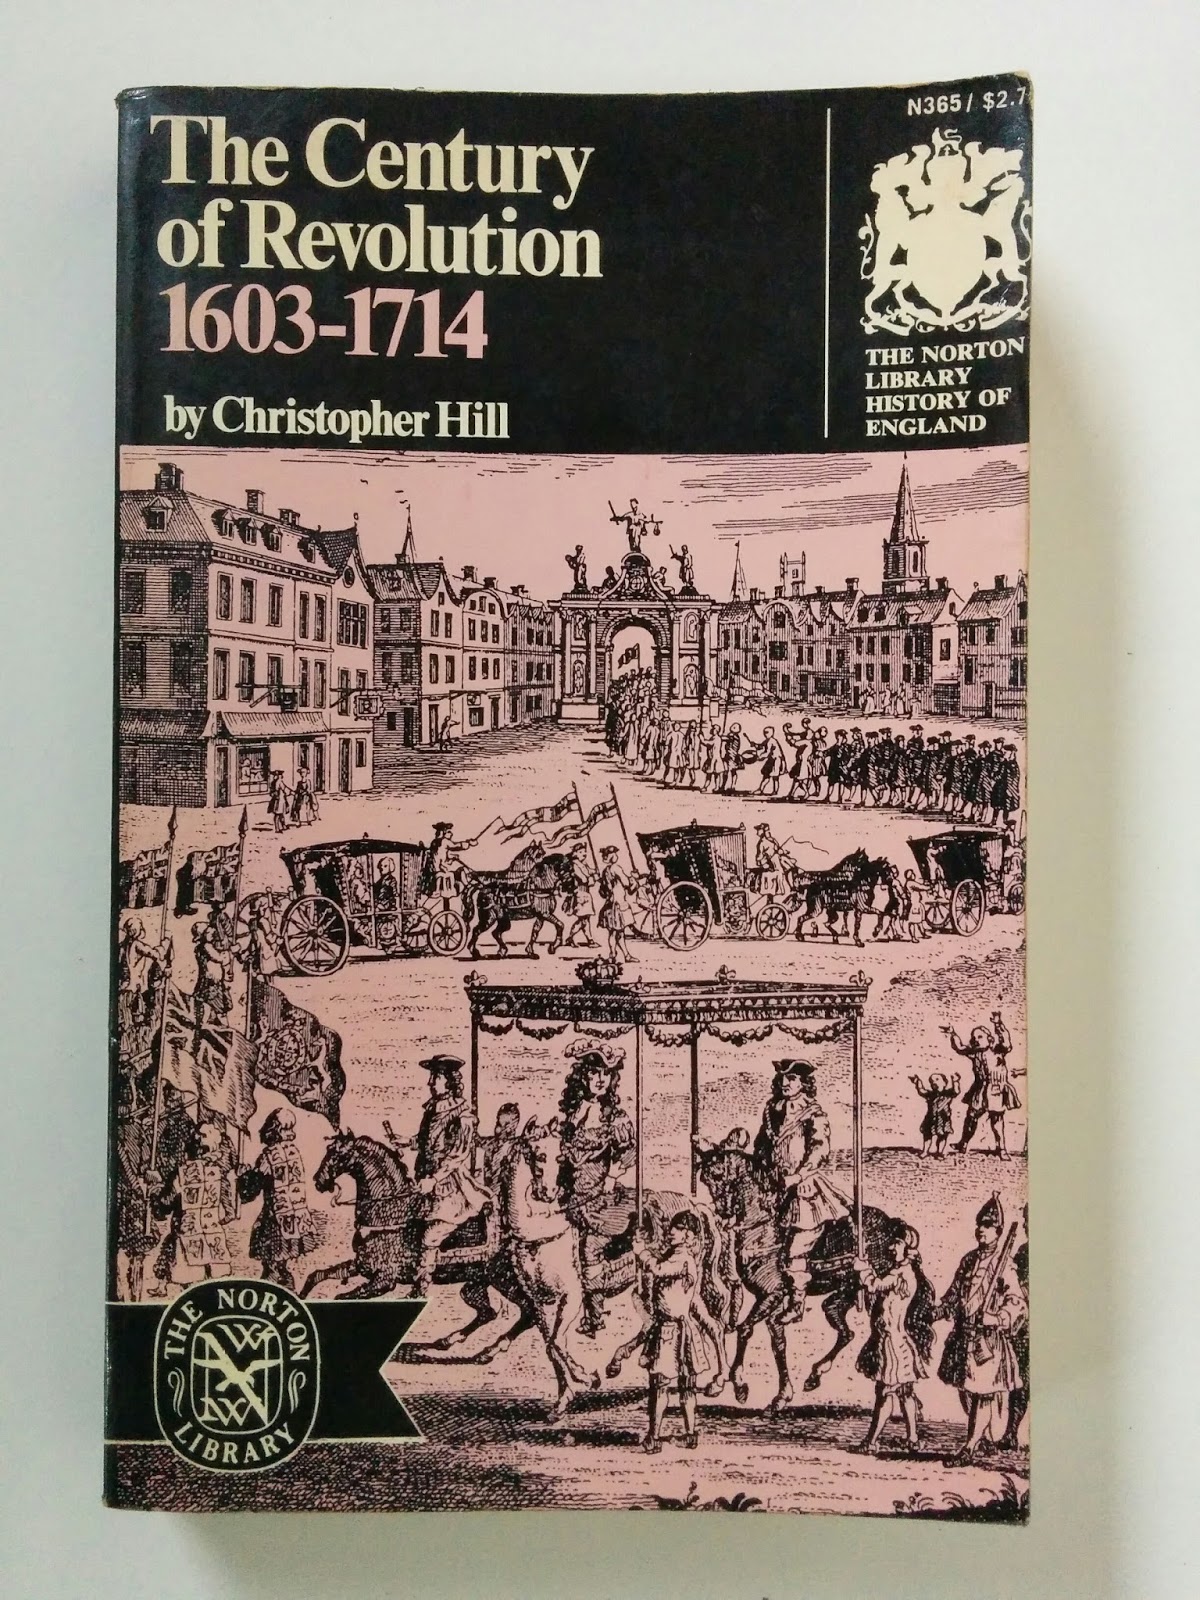 Хилл Кристофер. Английская Библия и революция XVII века.. Contract of the Century.